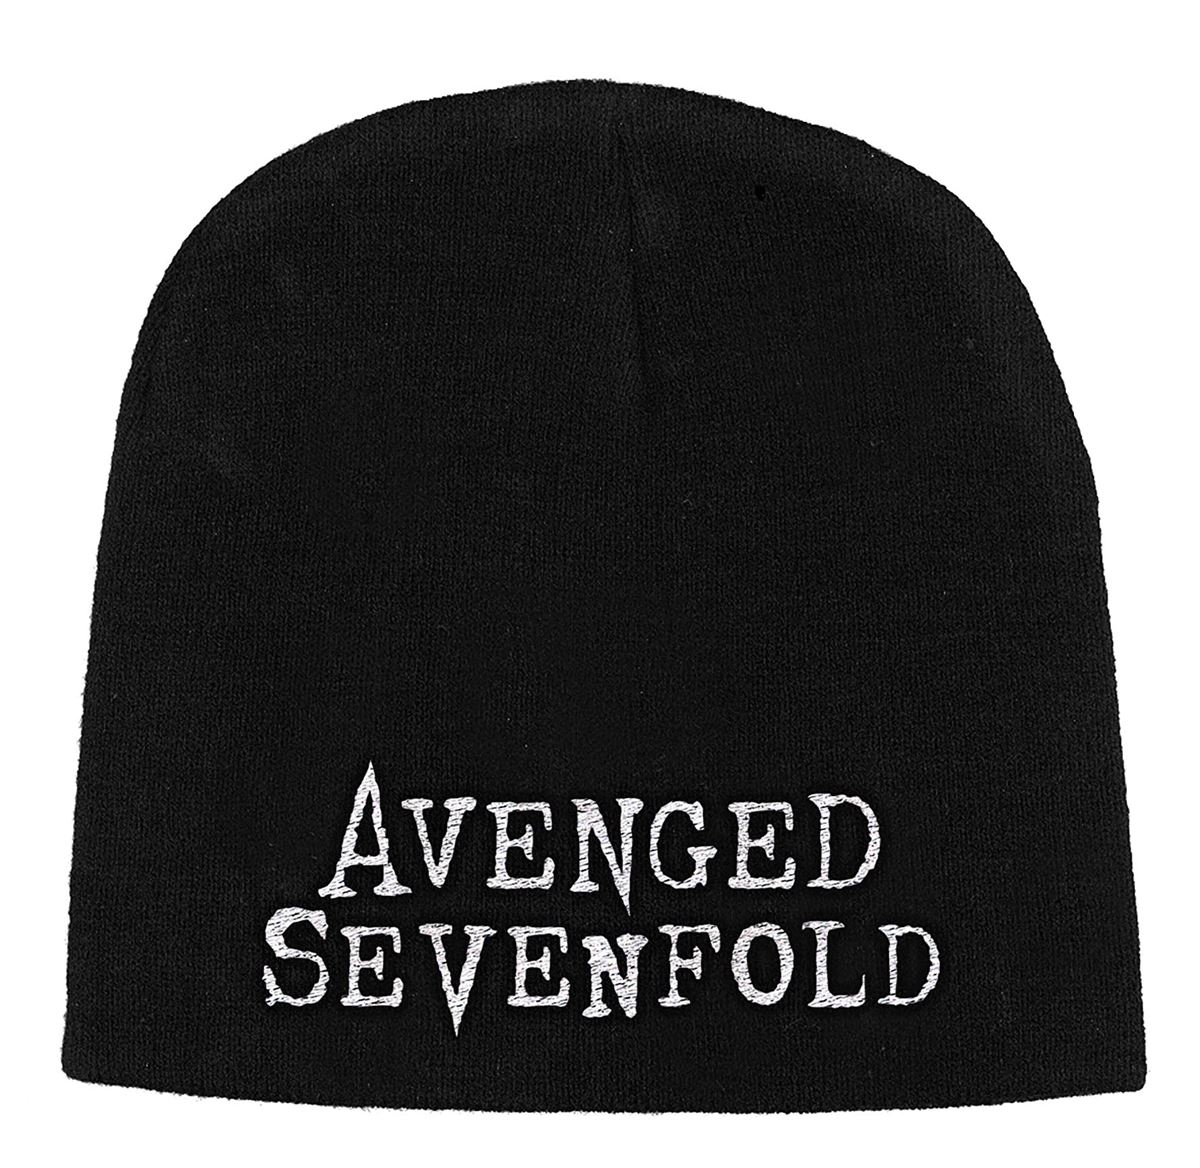 Caciula brodata Avenged Sevenfold - Logo BH114